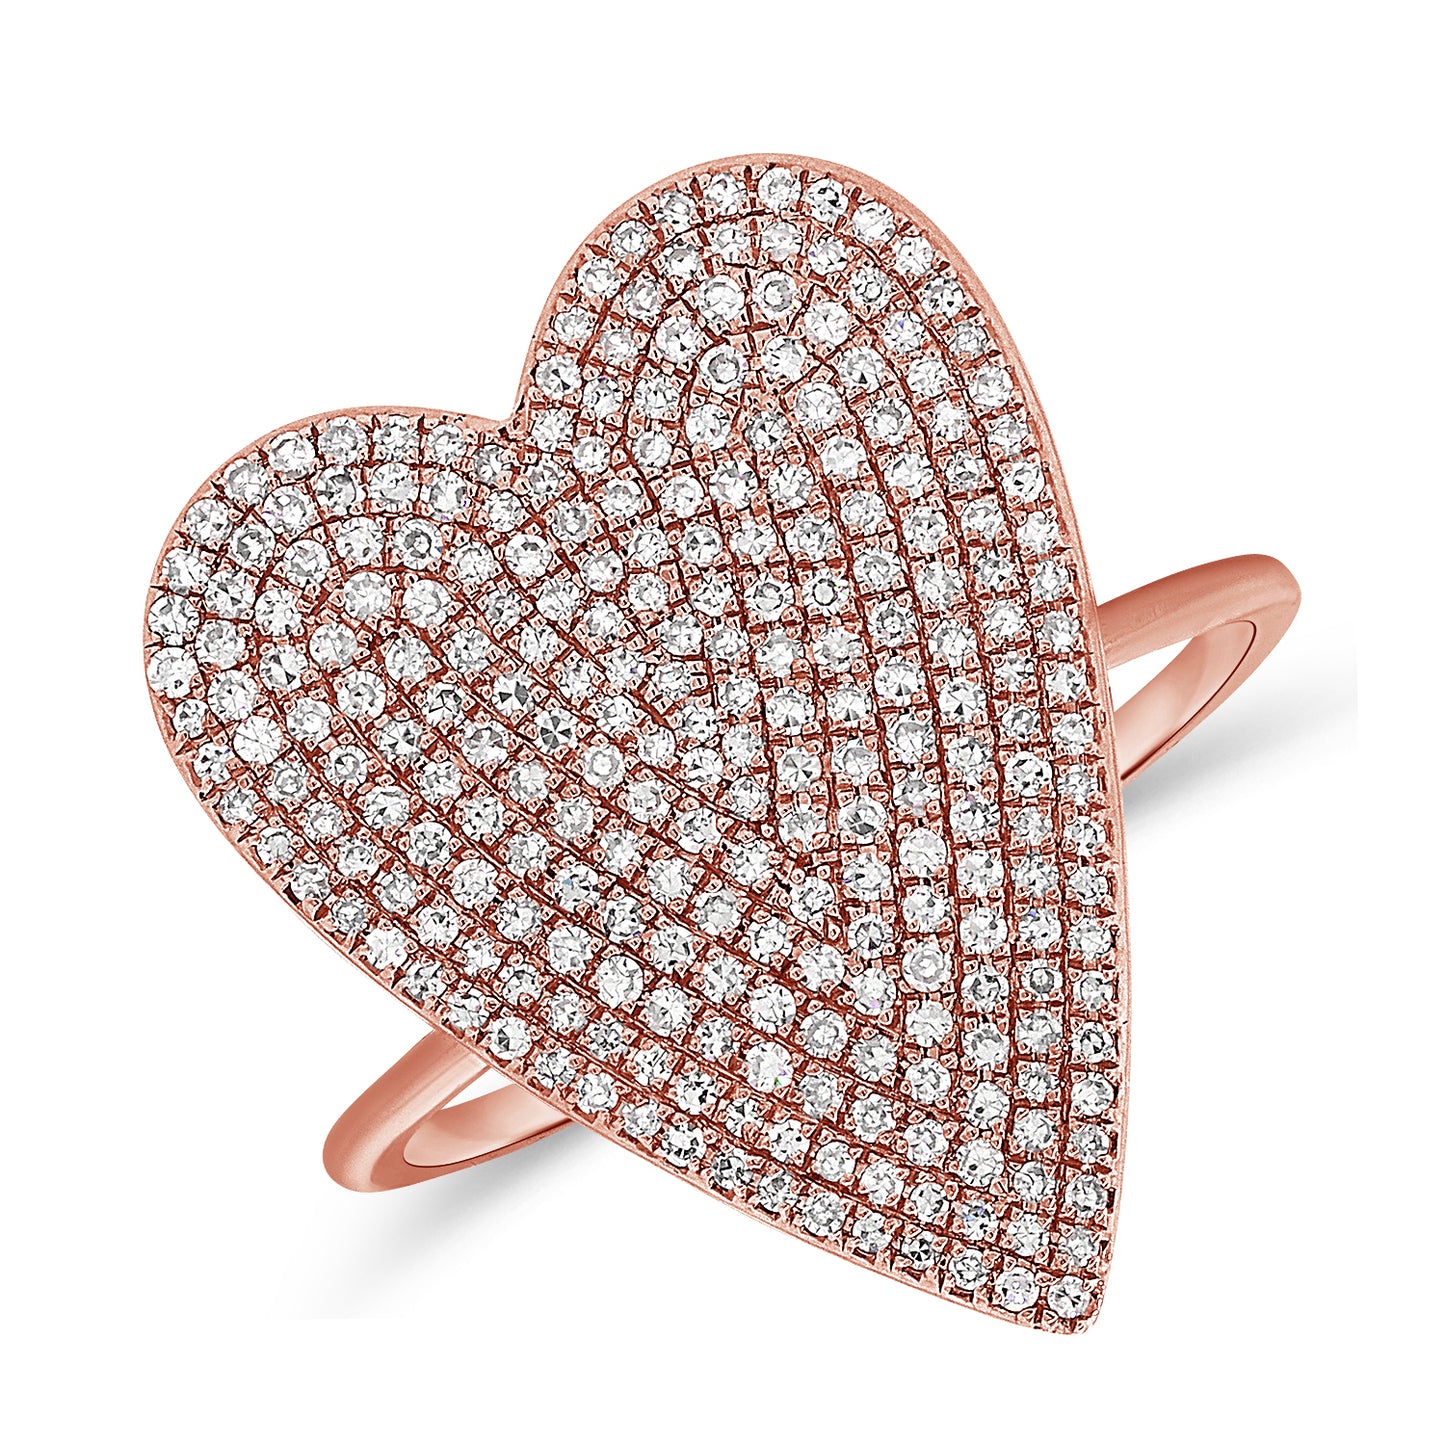 Large Pave Diamond Heart Ring